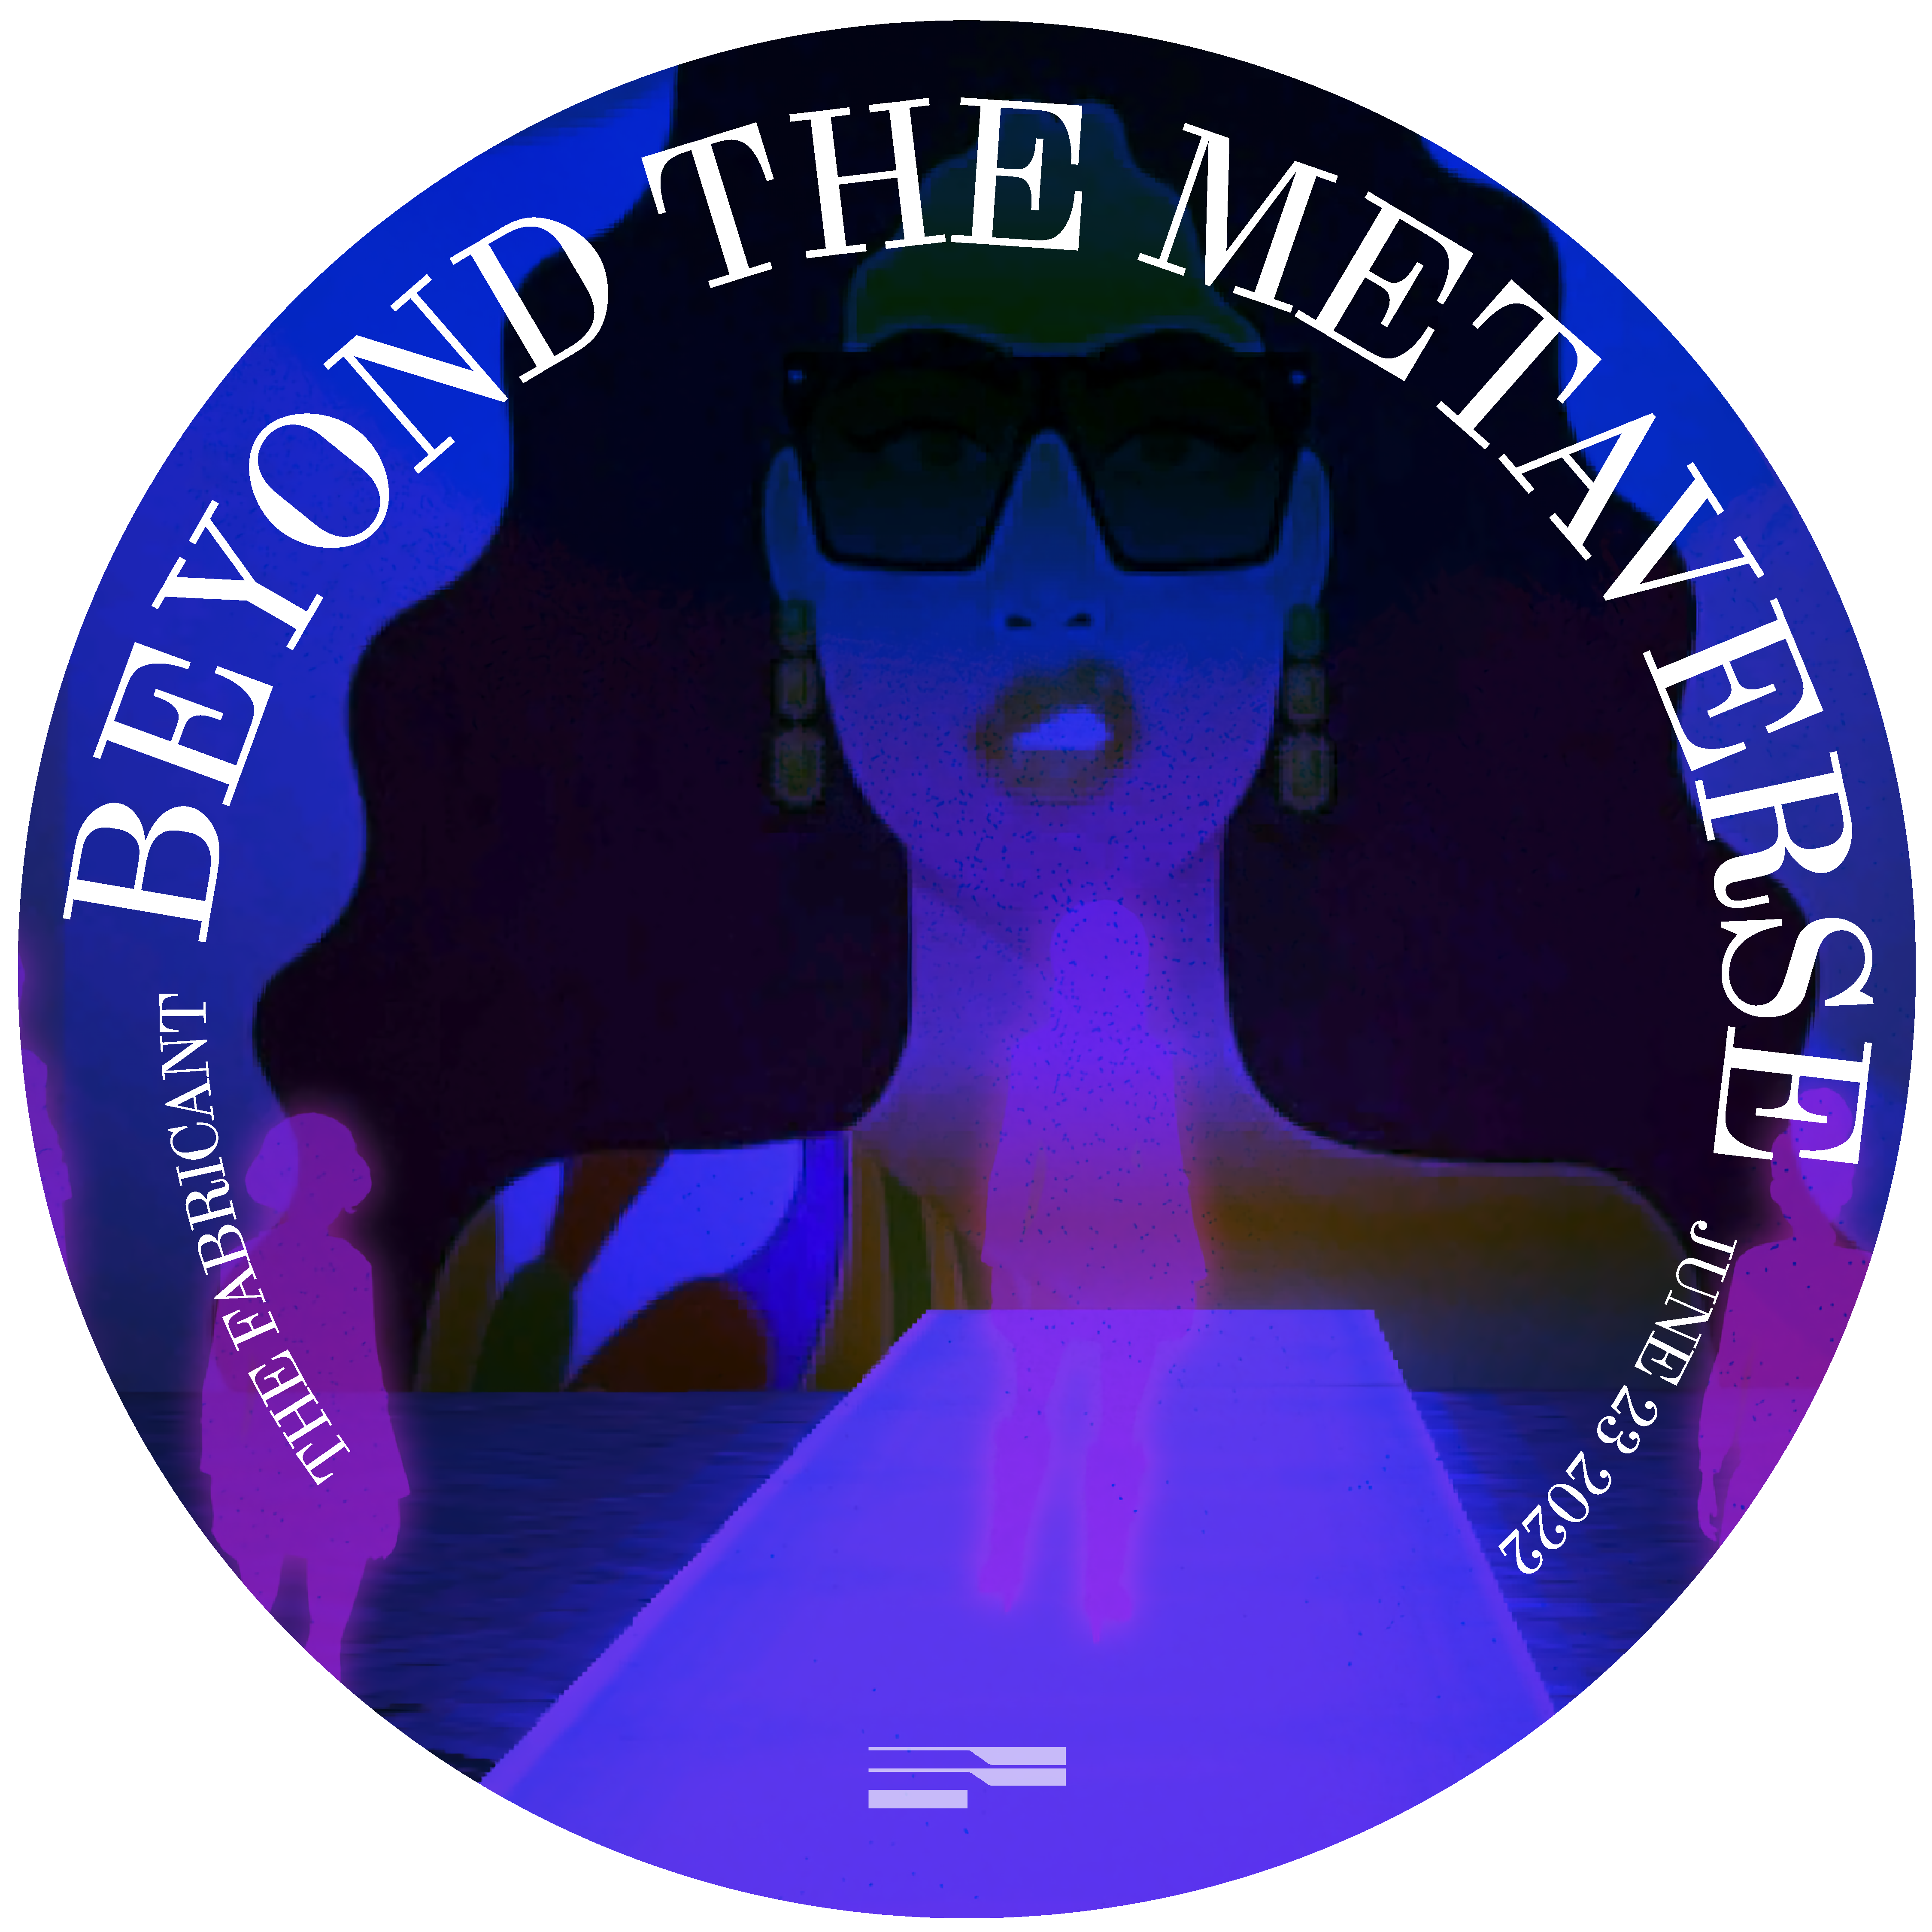 Beyond the Metaverse! Virtual event